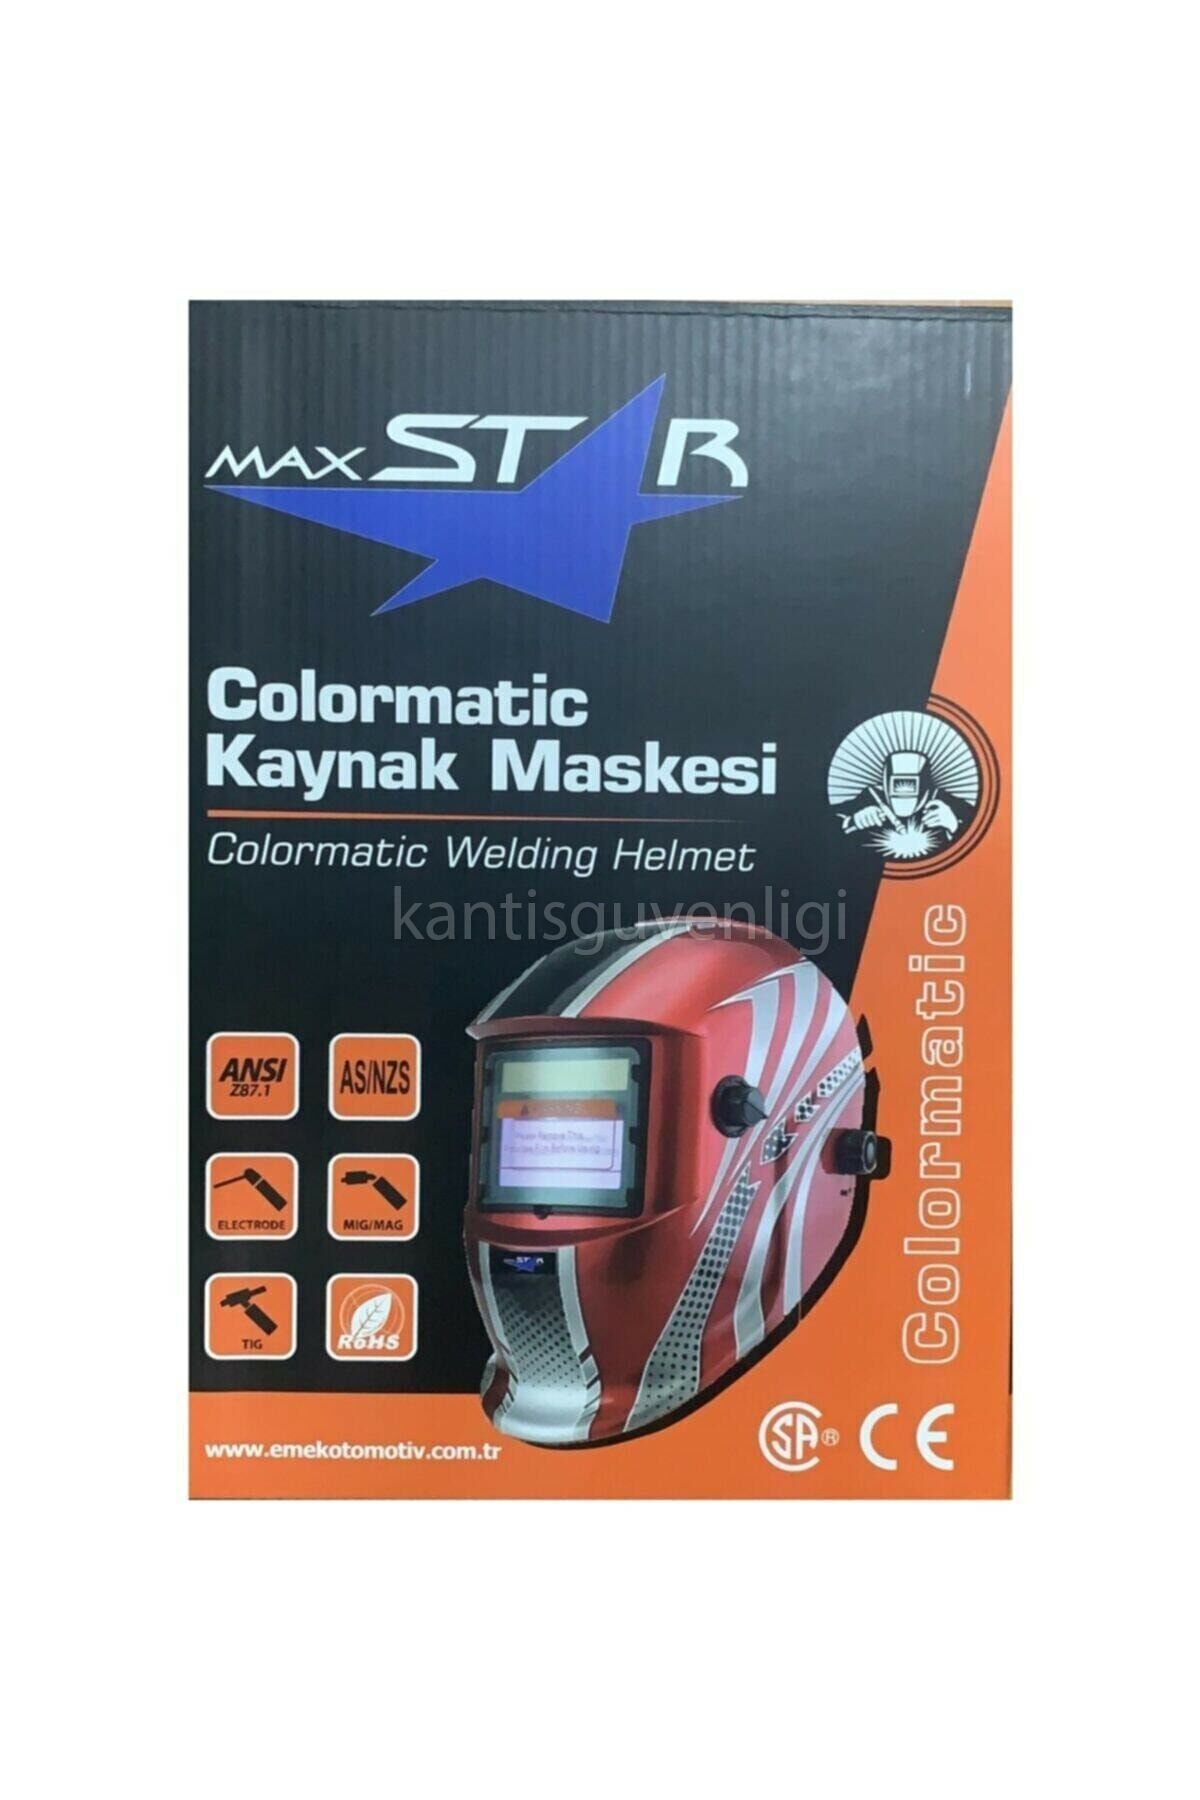 Max Star Colormatic Kaynak Maskesi